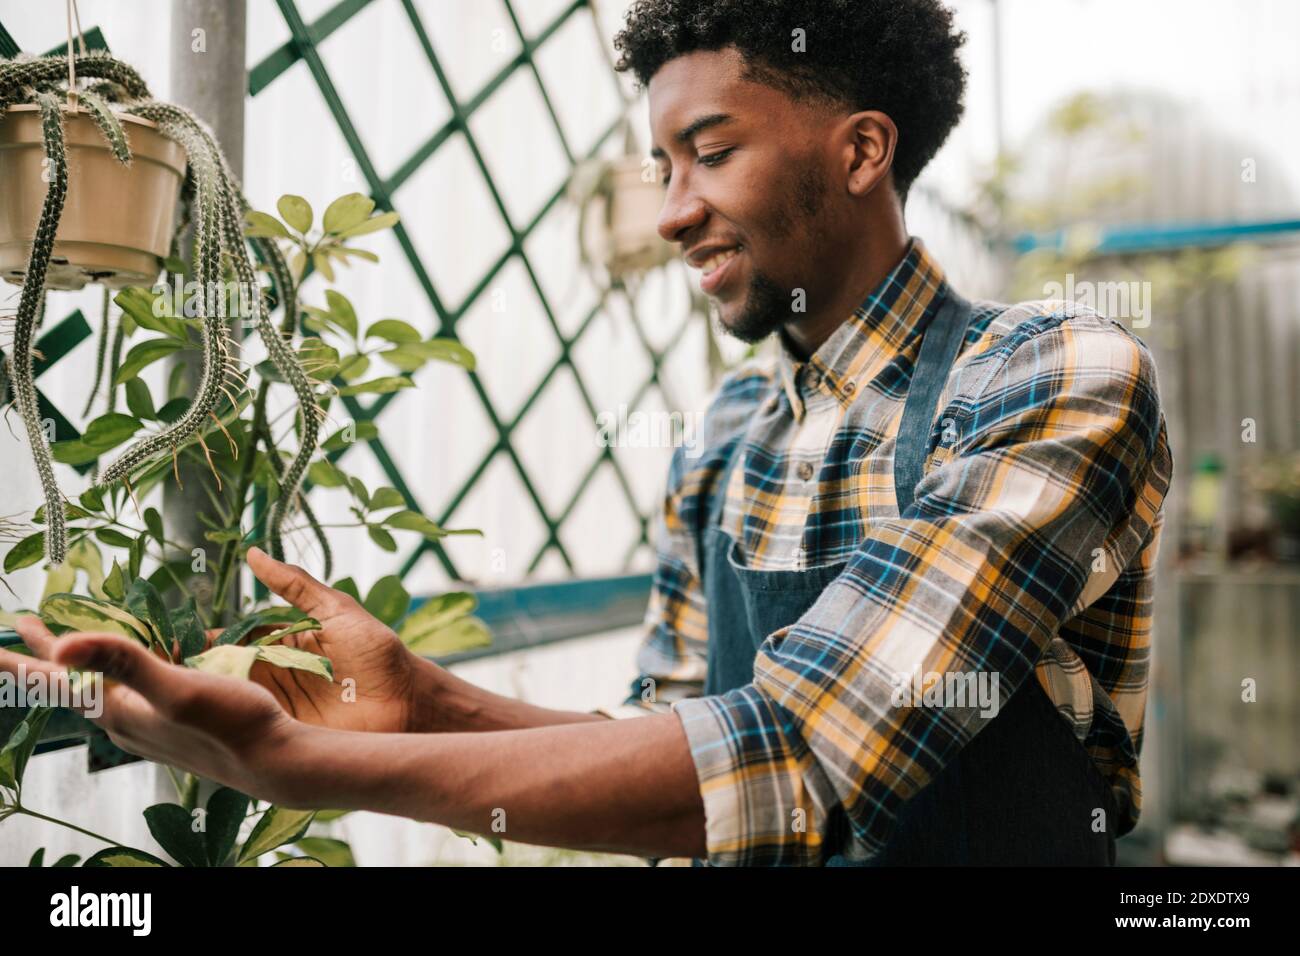 Smiling male botanist examining plant leaves at garden center Stock Photo